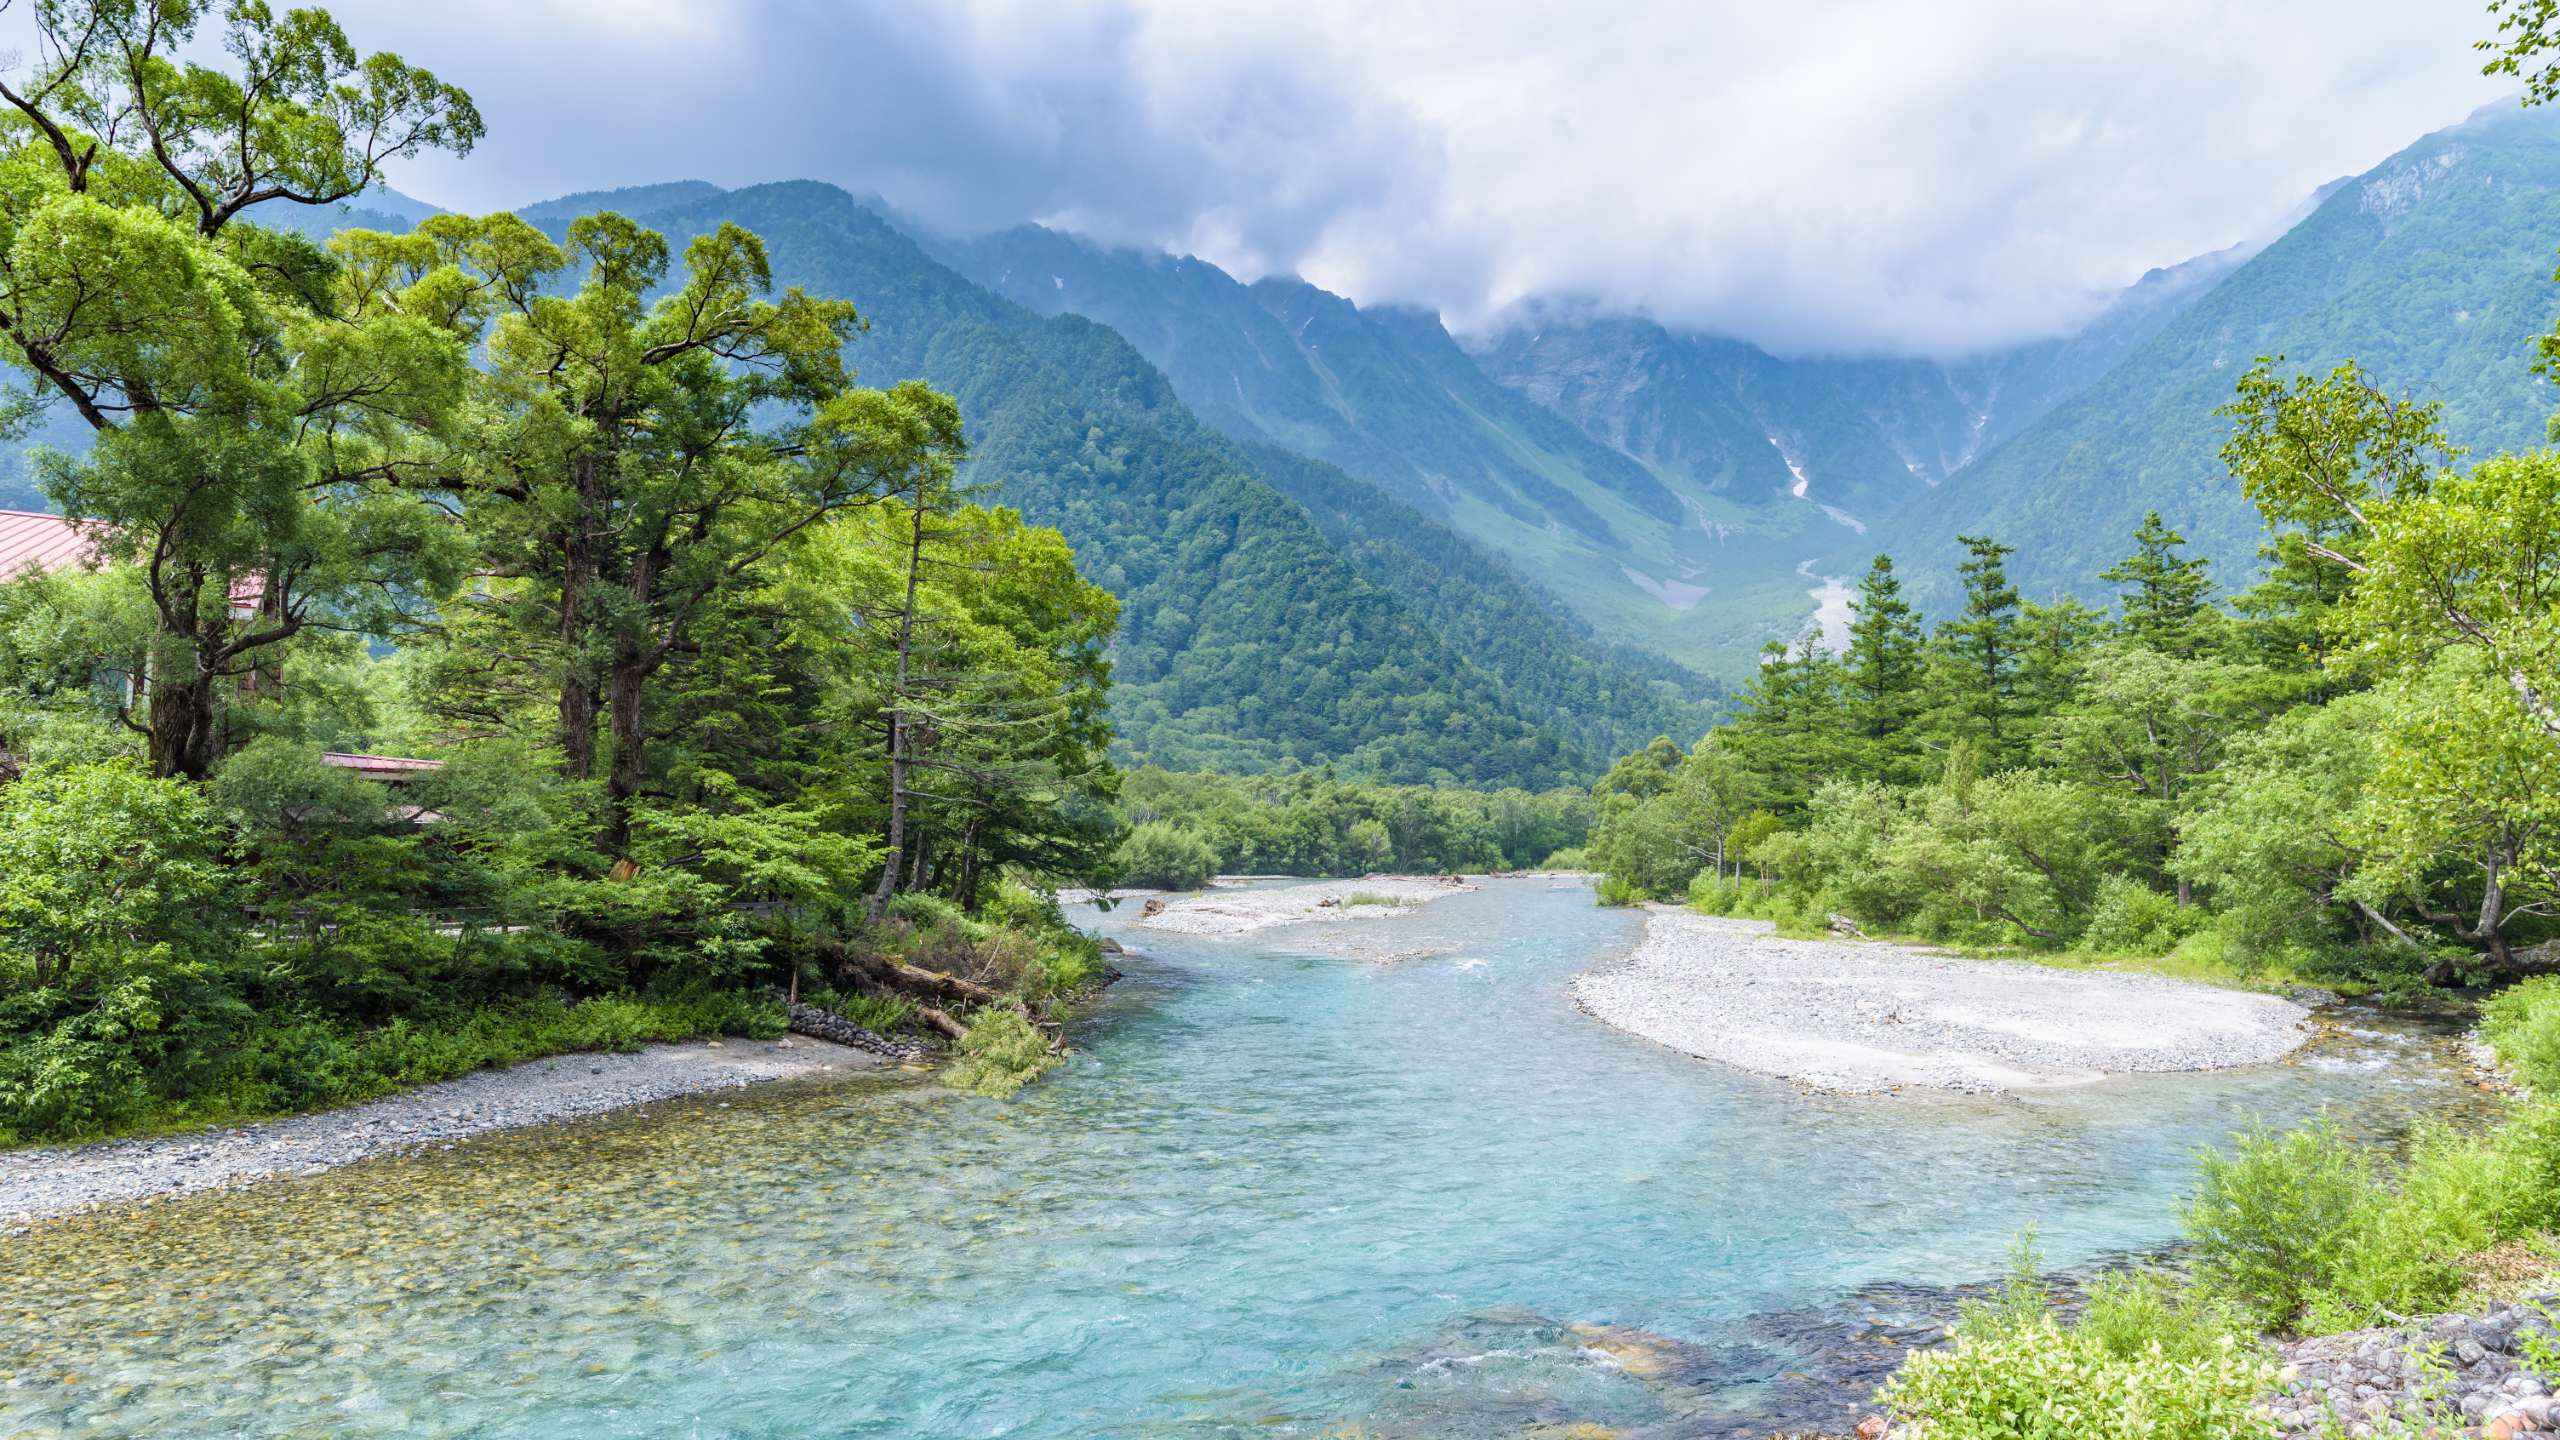 Kamikochi Japan, Hotaka Mountain and Azusa River